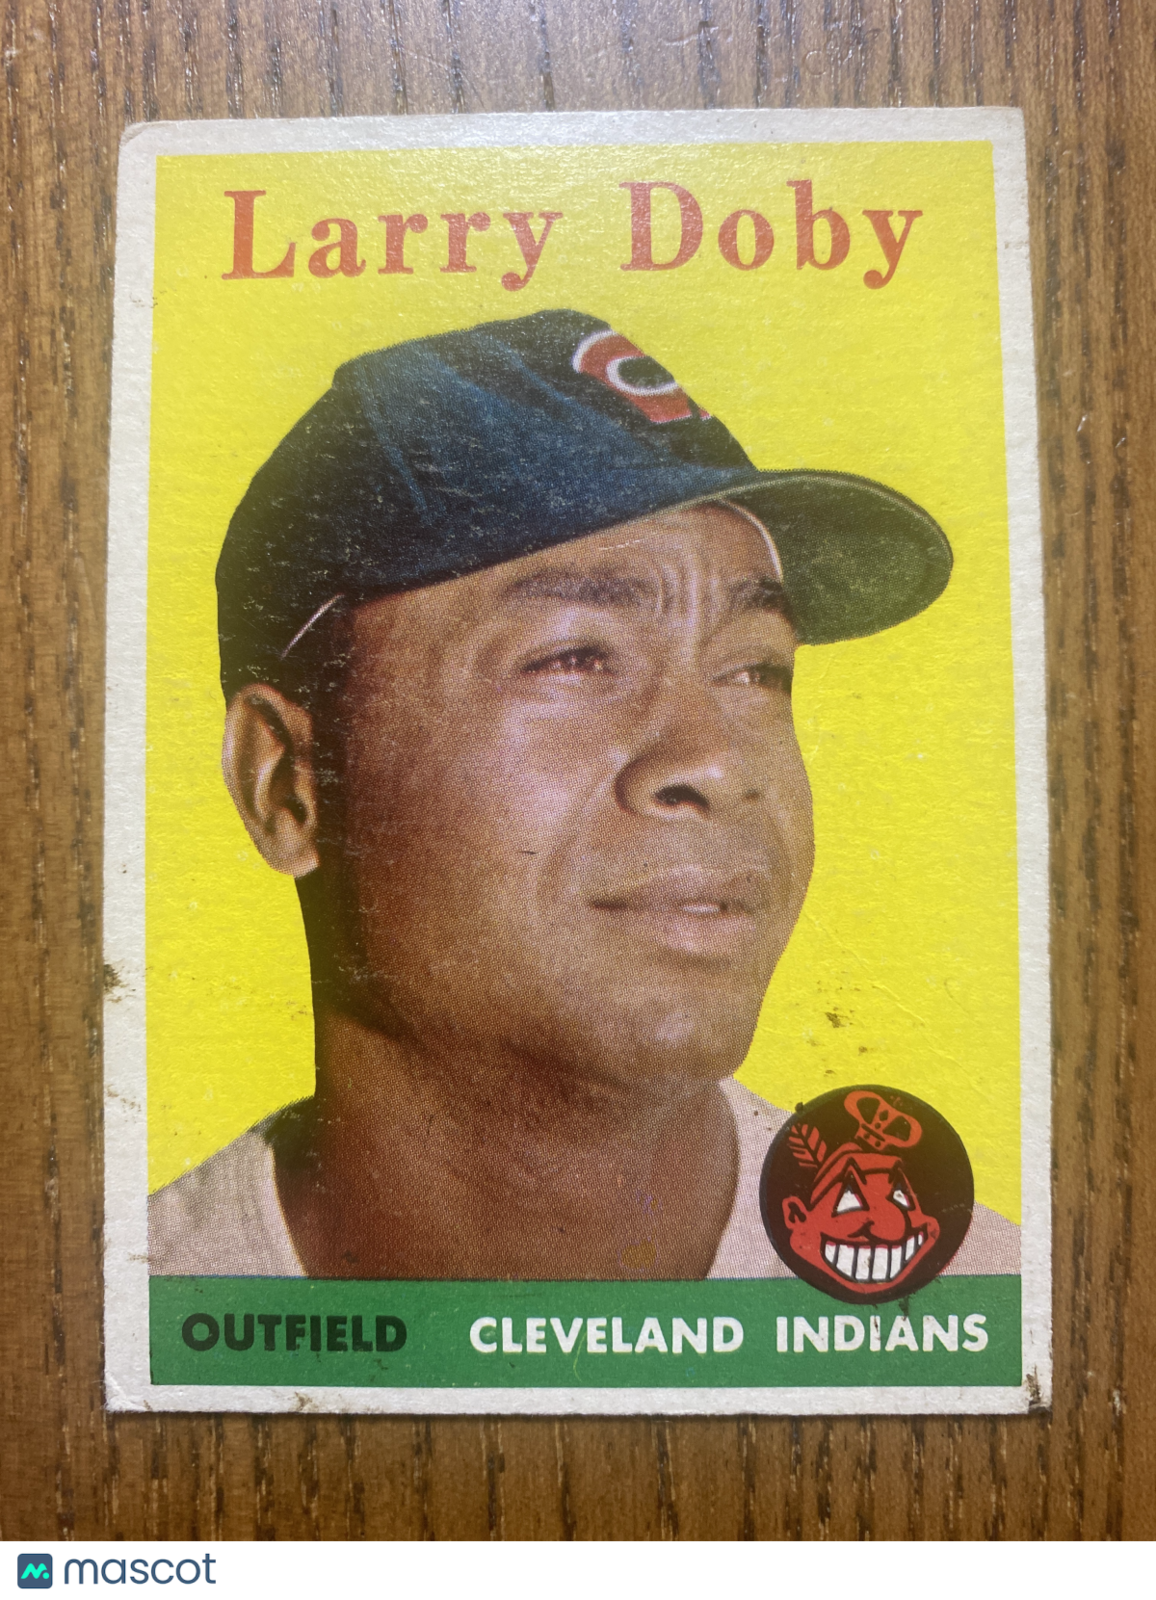 1958 Topps Larry Doby #424 - £7.85 GBP